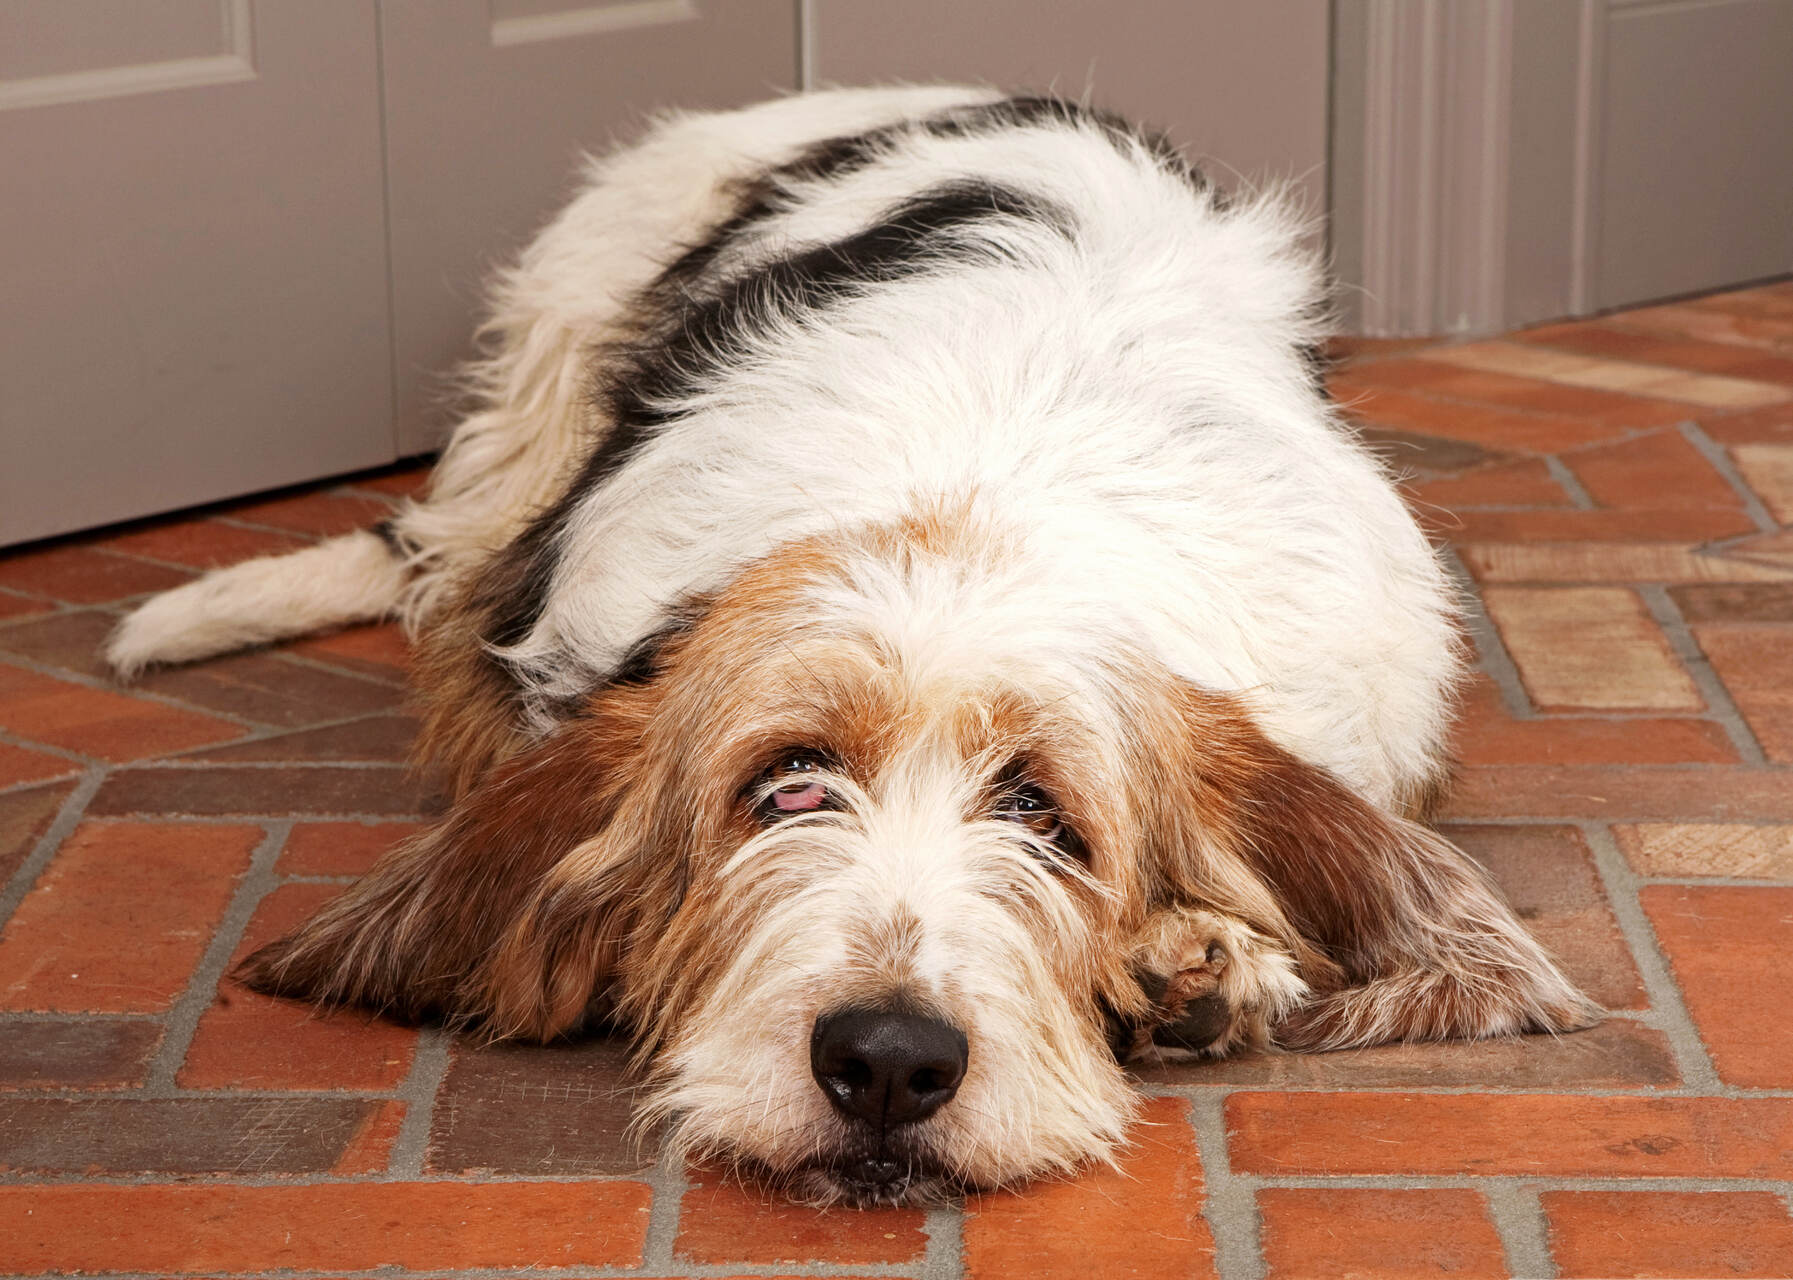 A sick dog lying on the floor